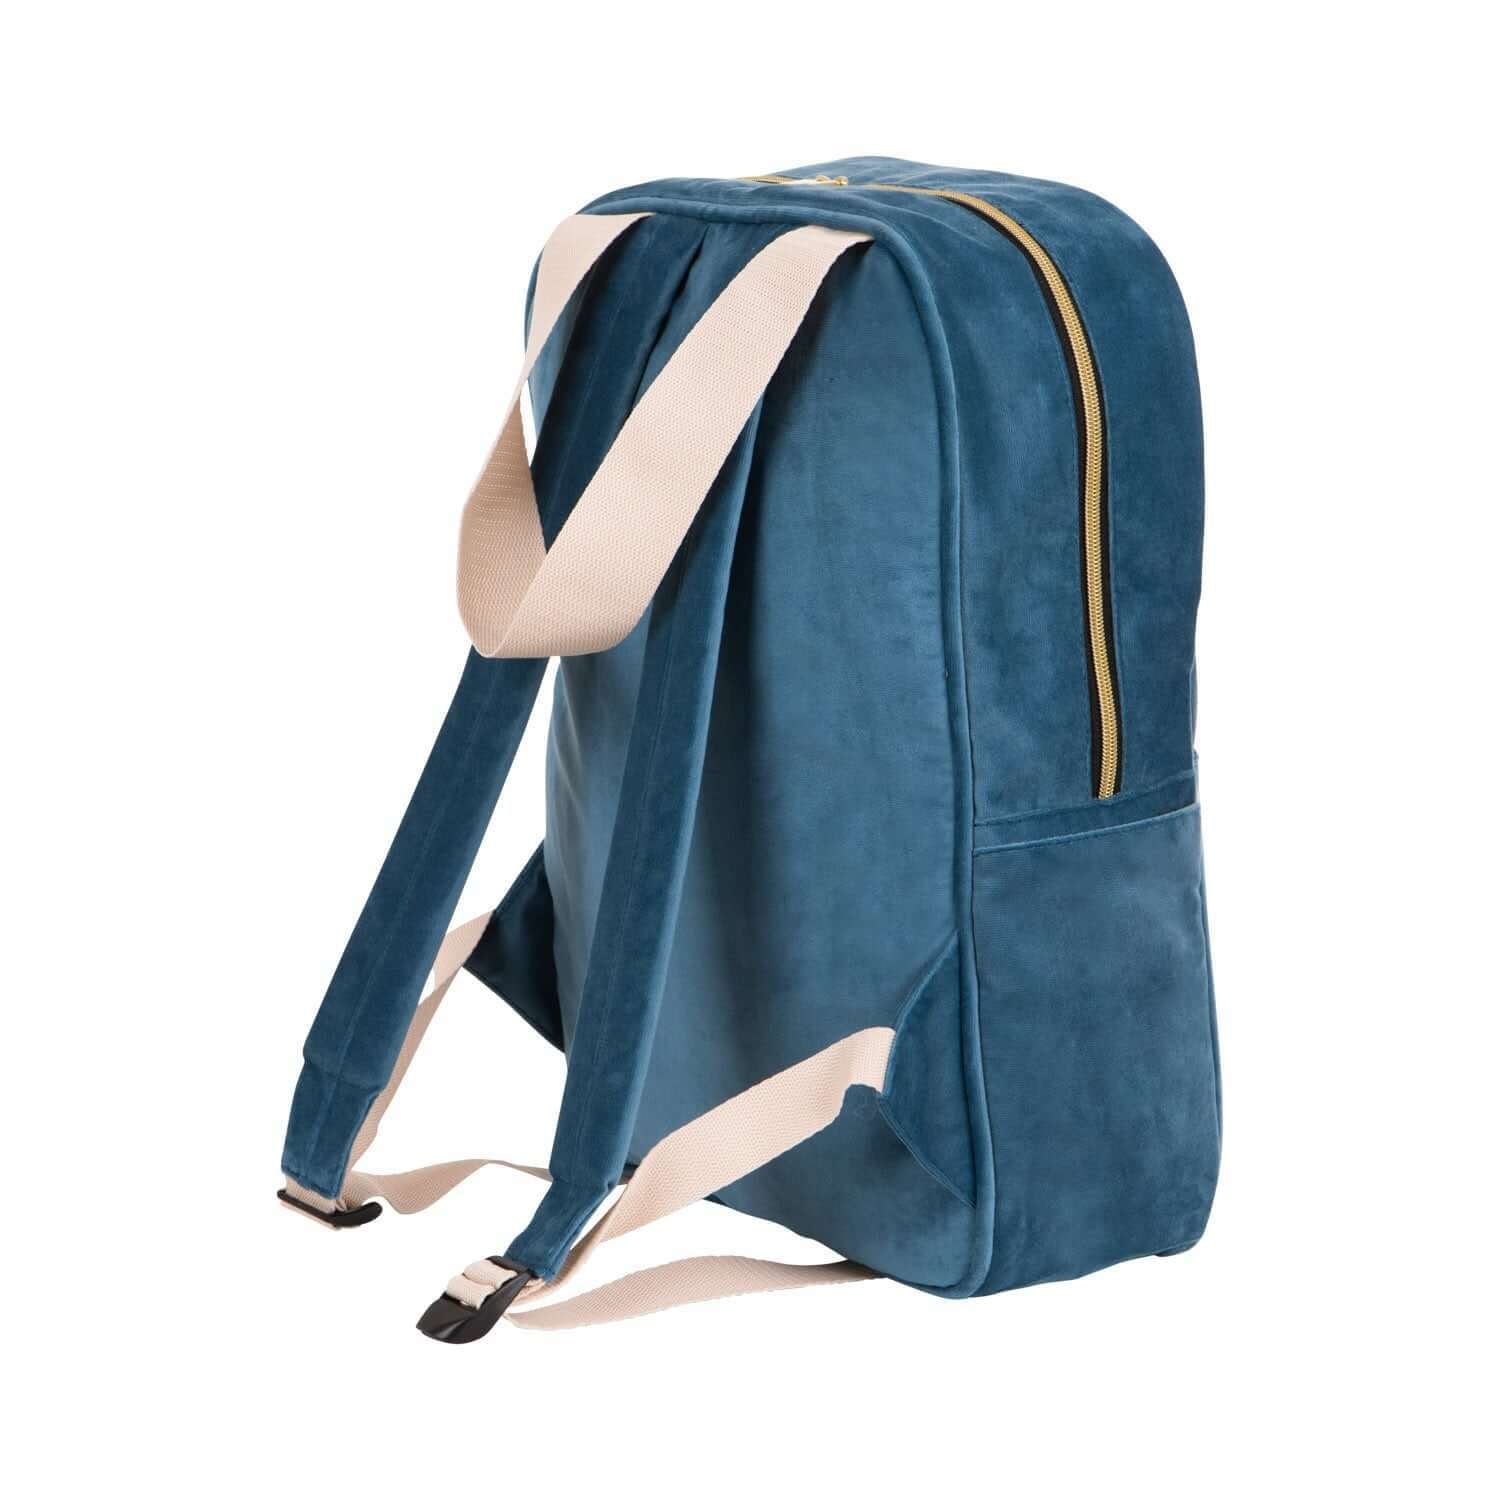 blue velvet backpack by bettys home. ladies backpack for work. best backpack for college 